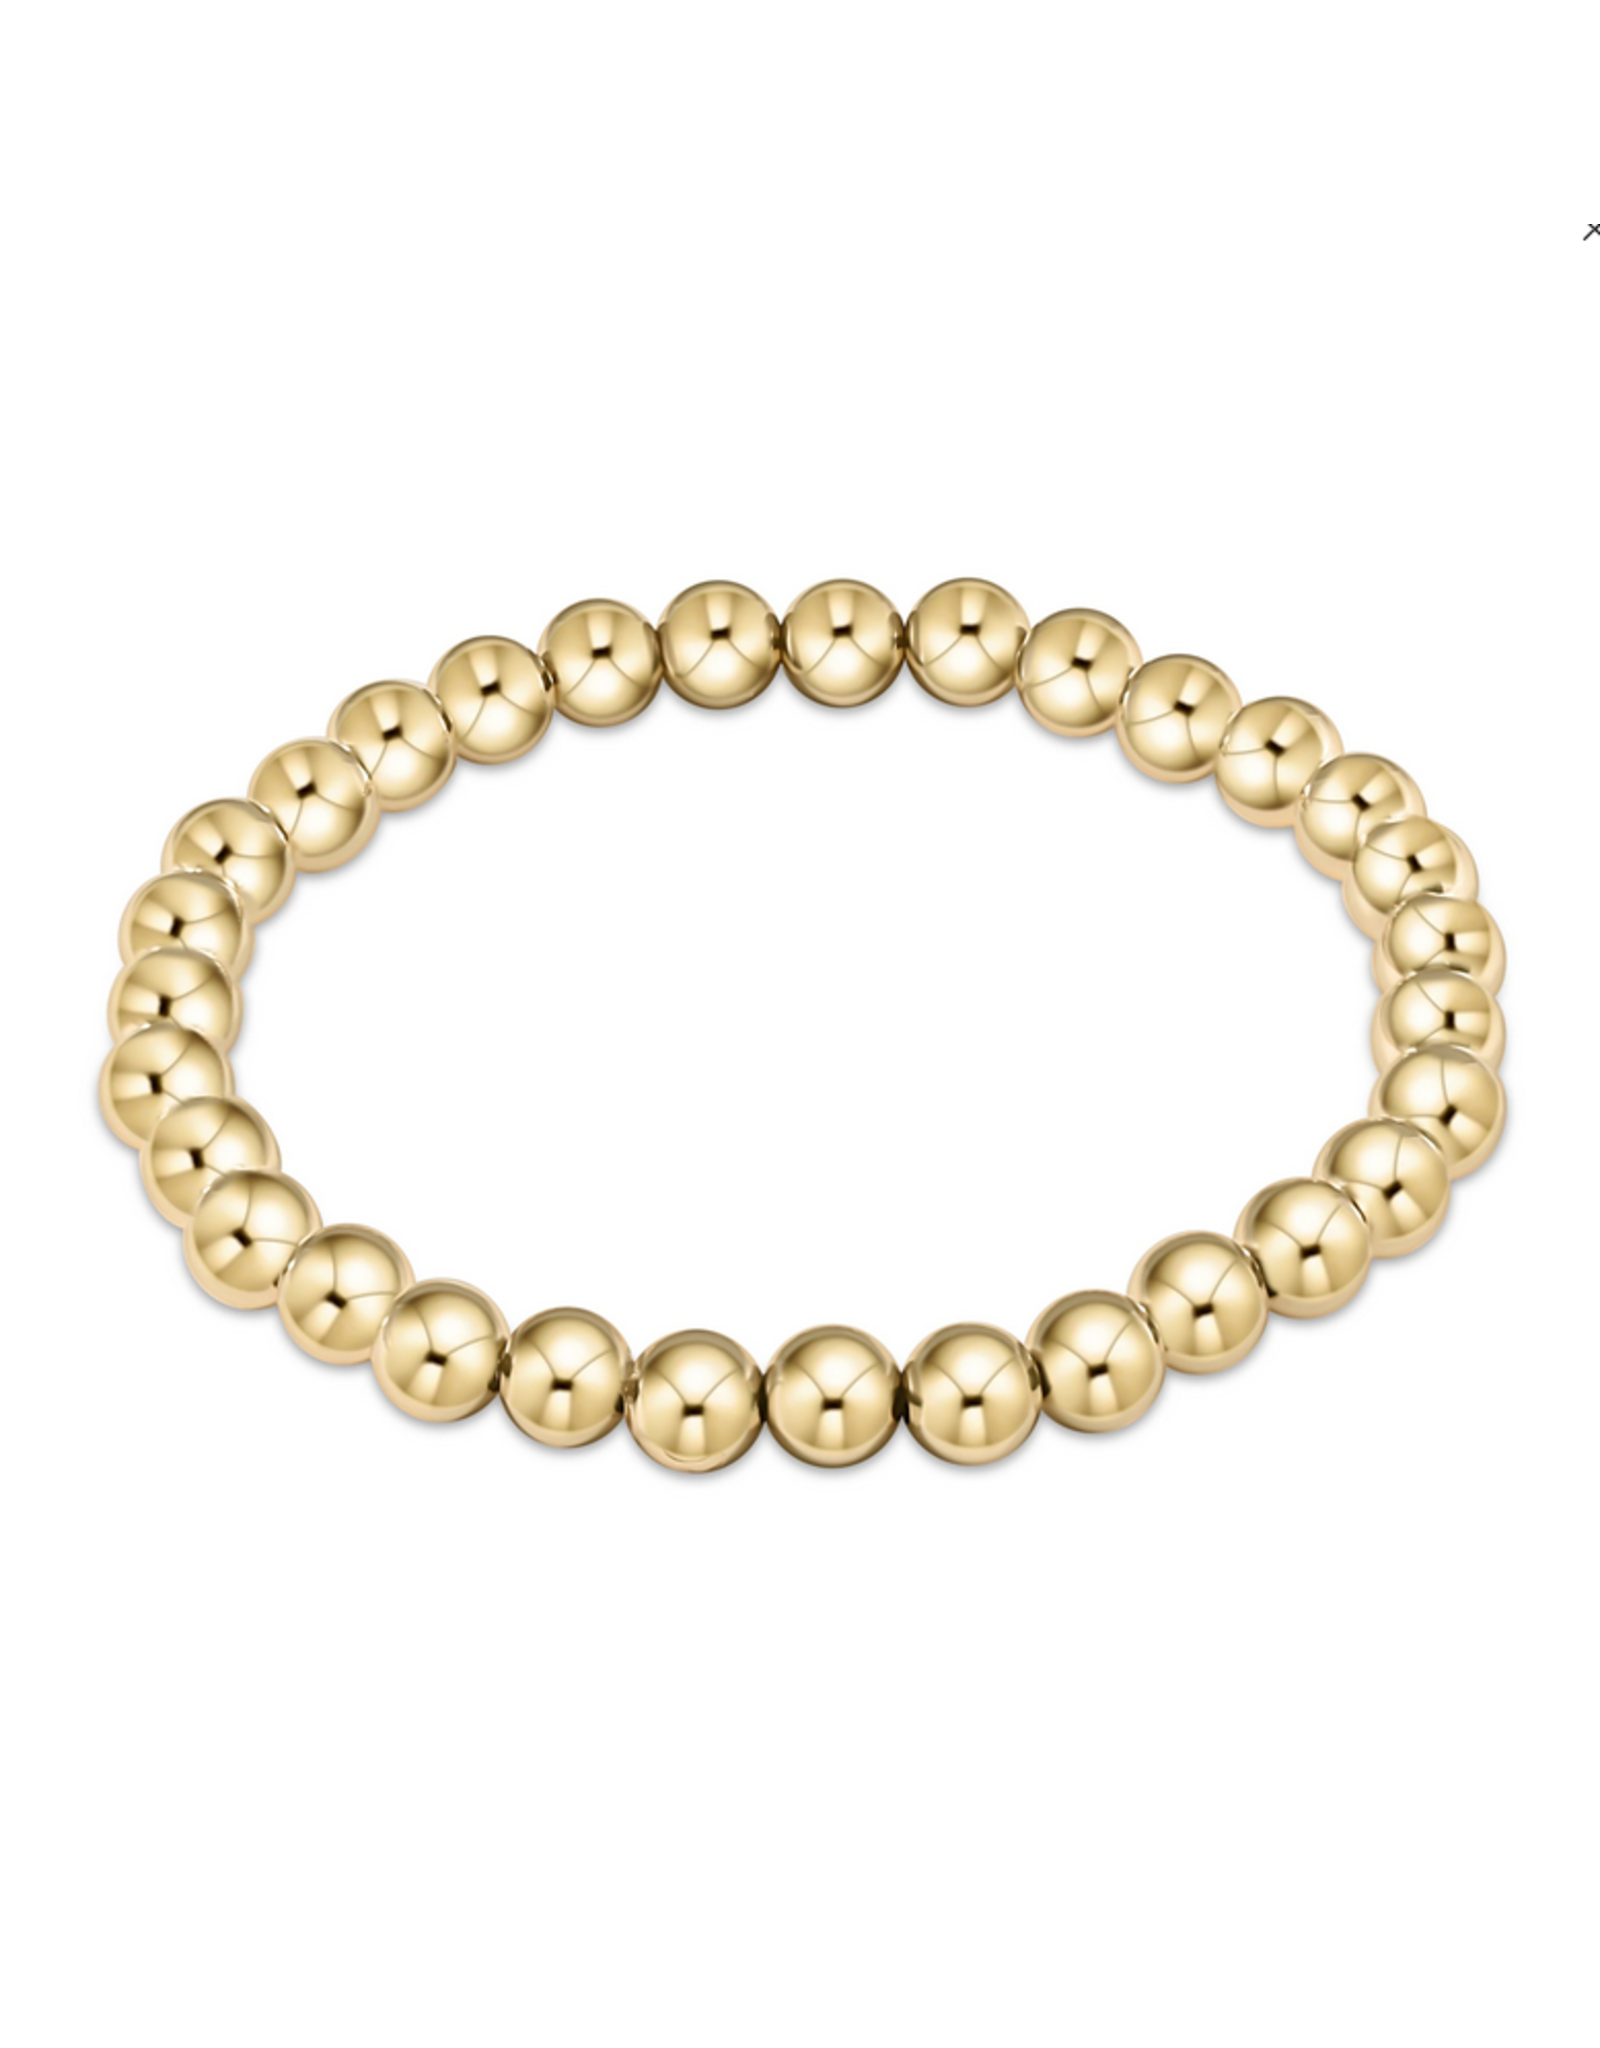 enewton Classic Gold Pattern 6mm Bead Bracelet